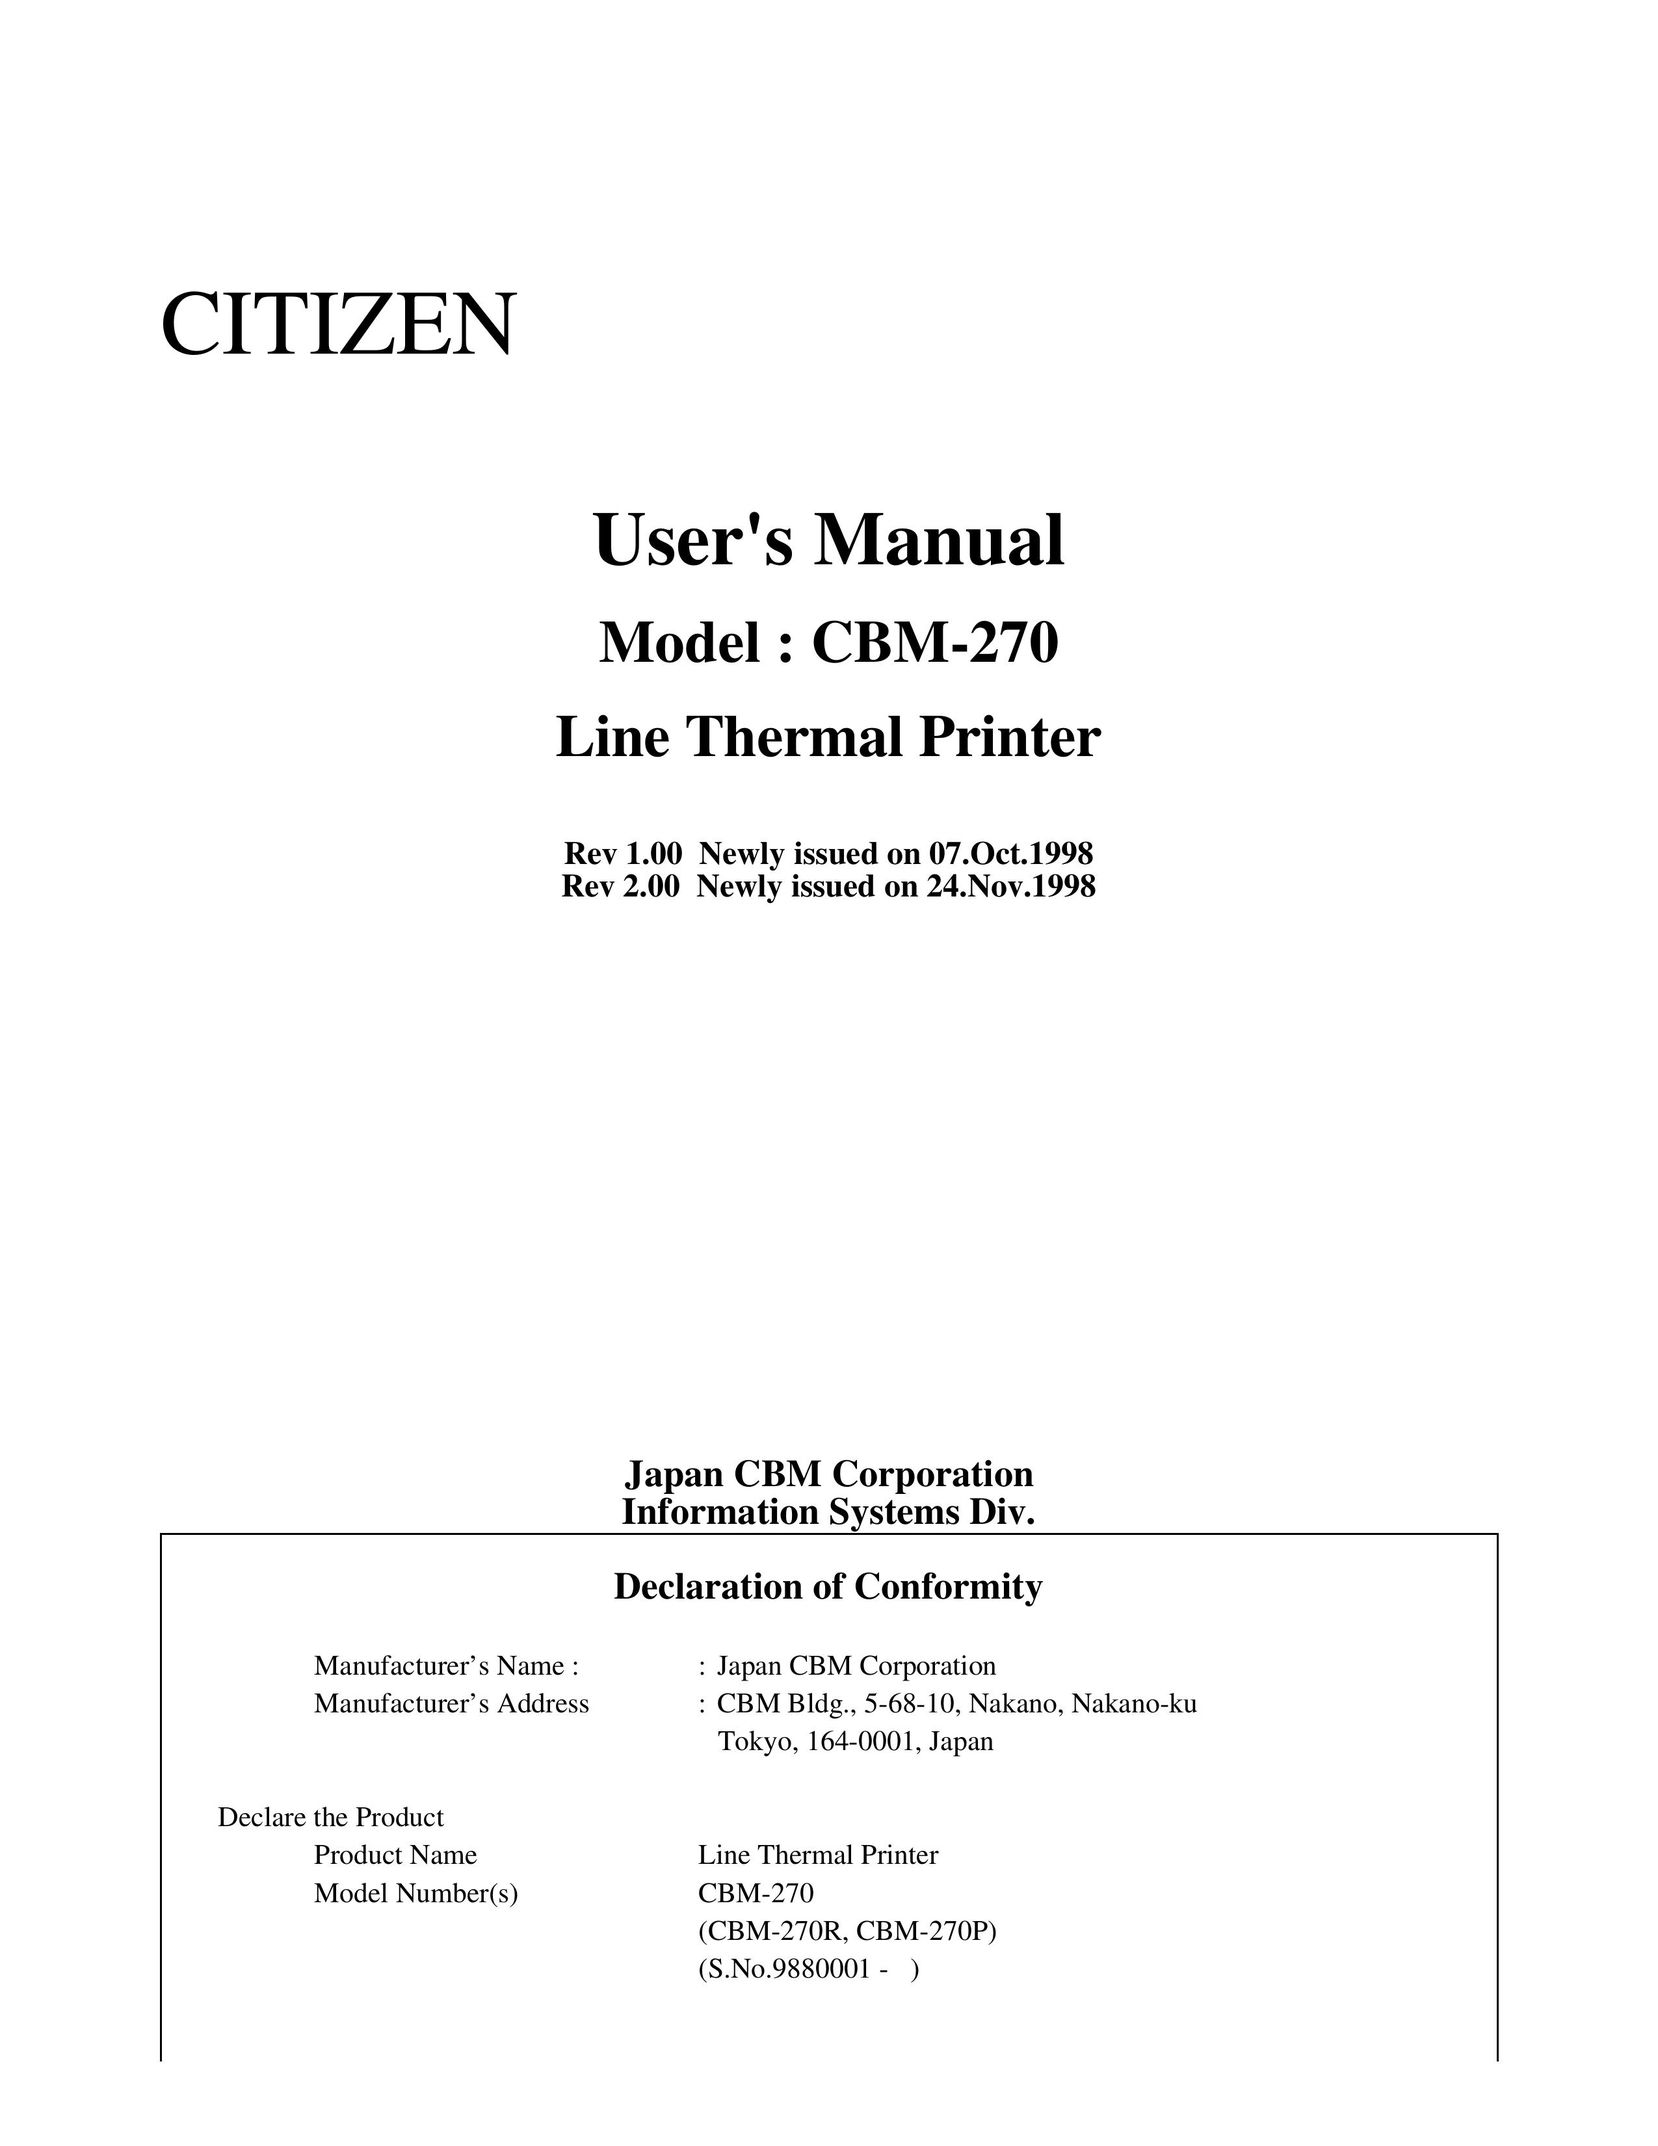 Citizen Systems CBM-270 Printer User Manual